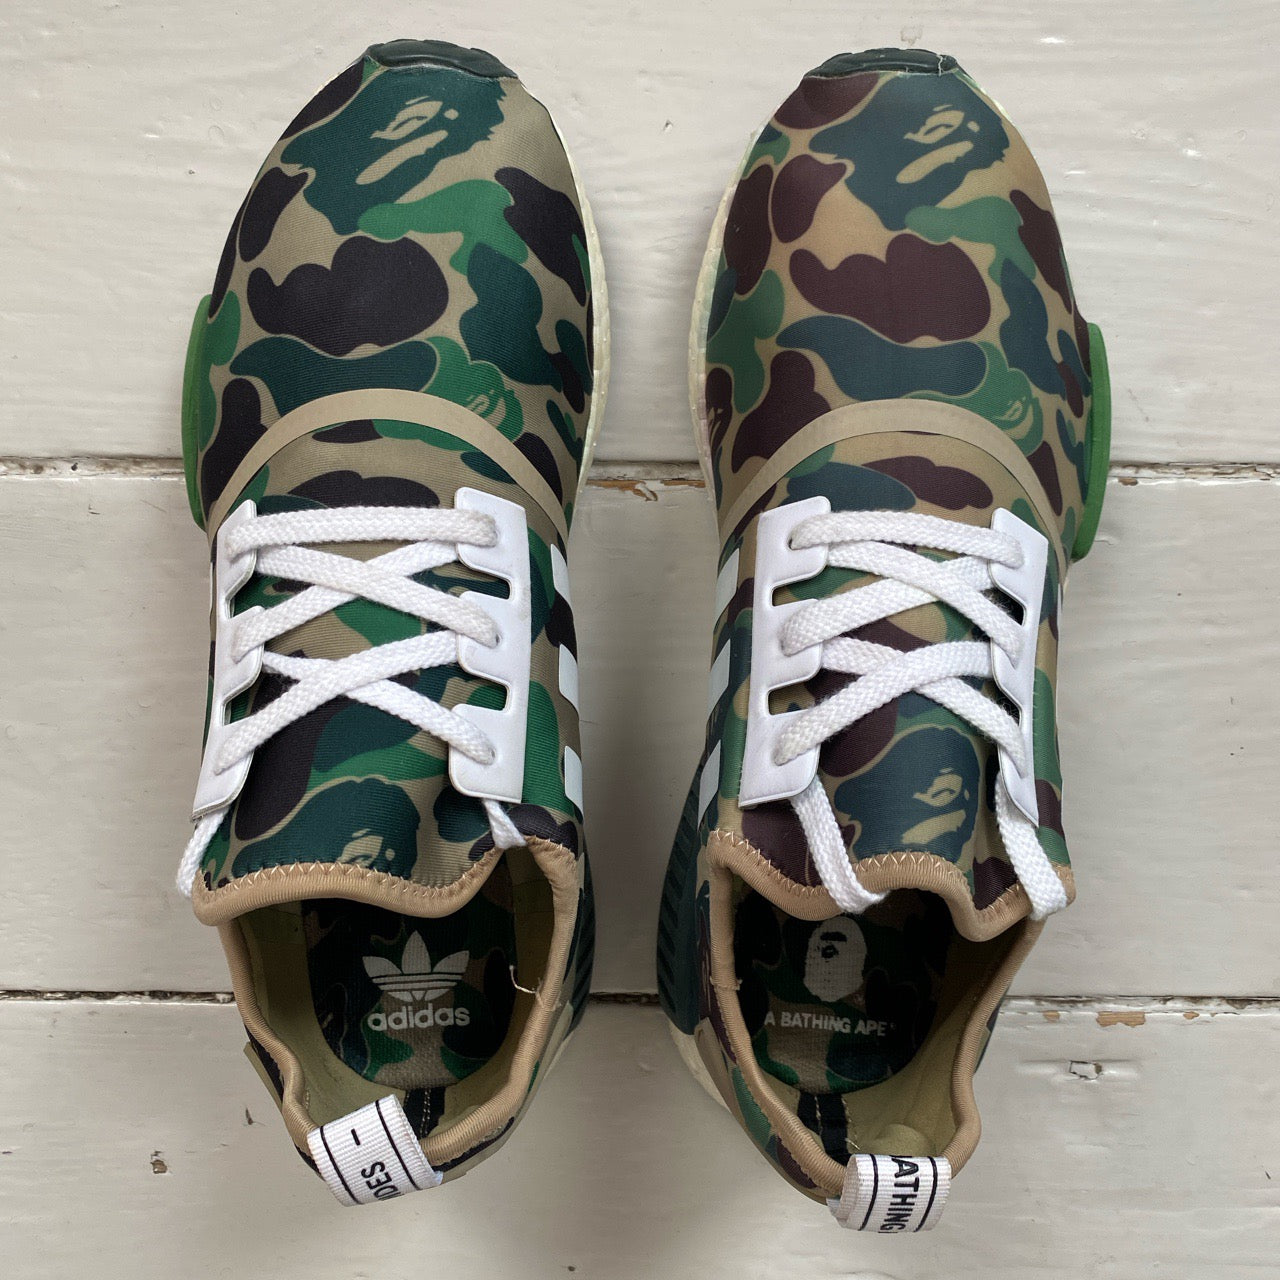 Adidas BAPE NMD Green Camouflage (UK 9)